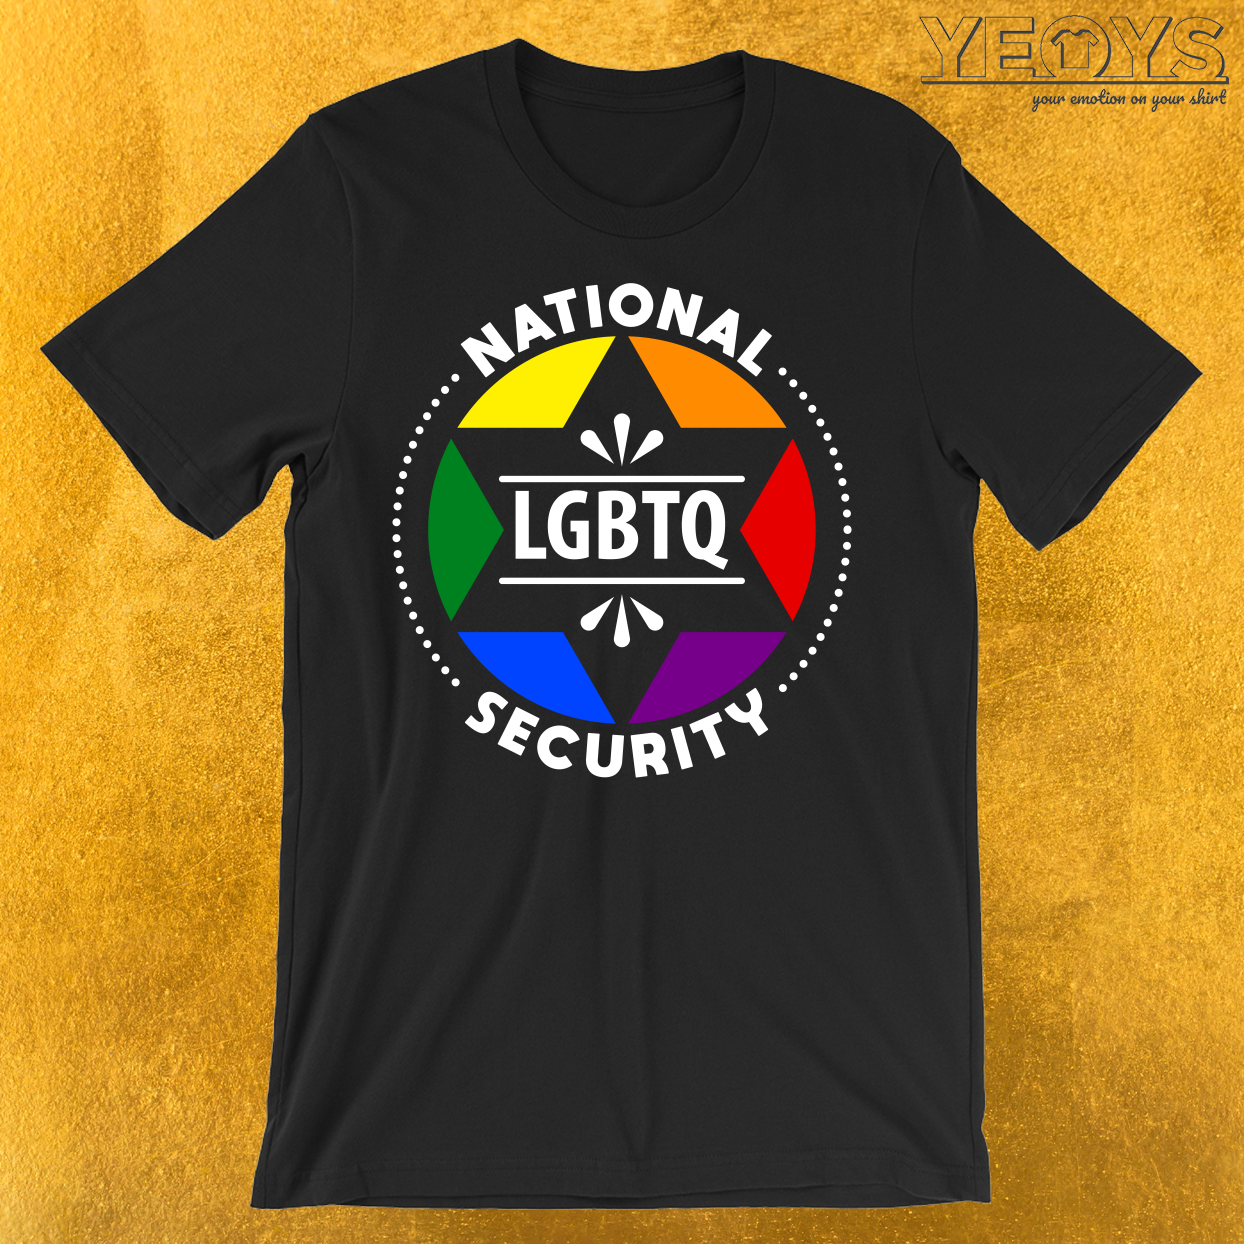 National LGBTQ Security T-Shirt